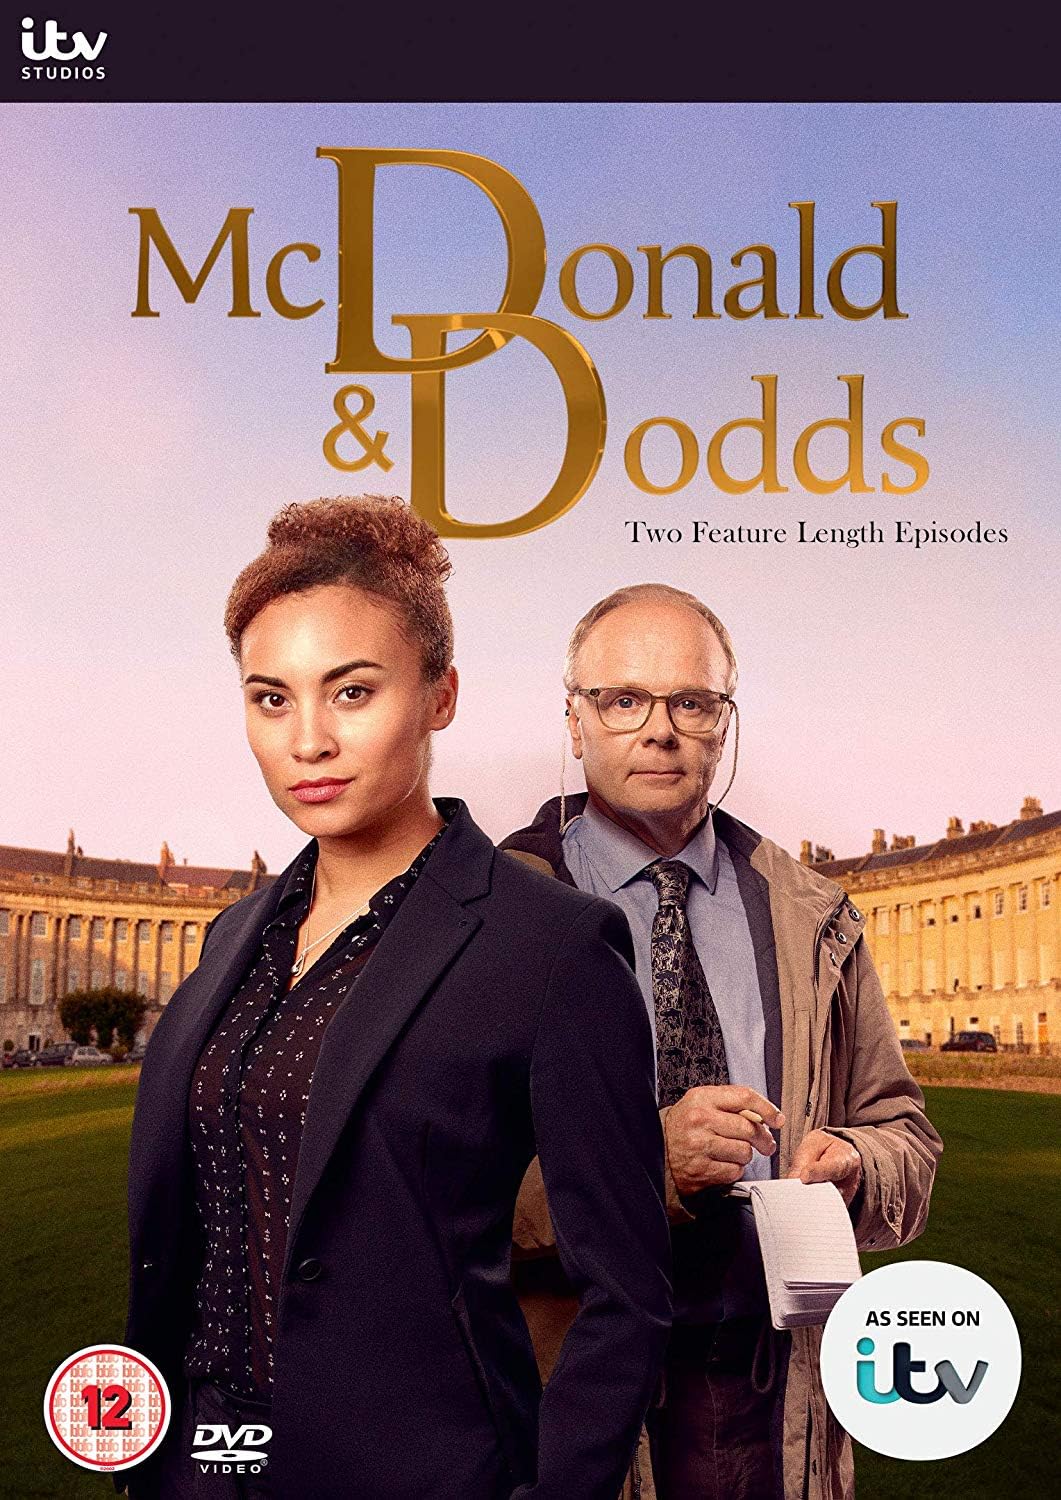 McDonald & Dodds (season 4)